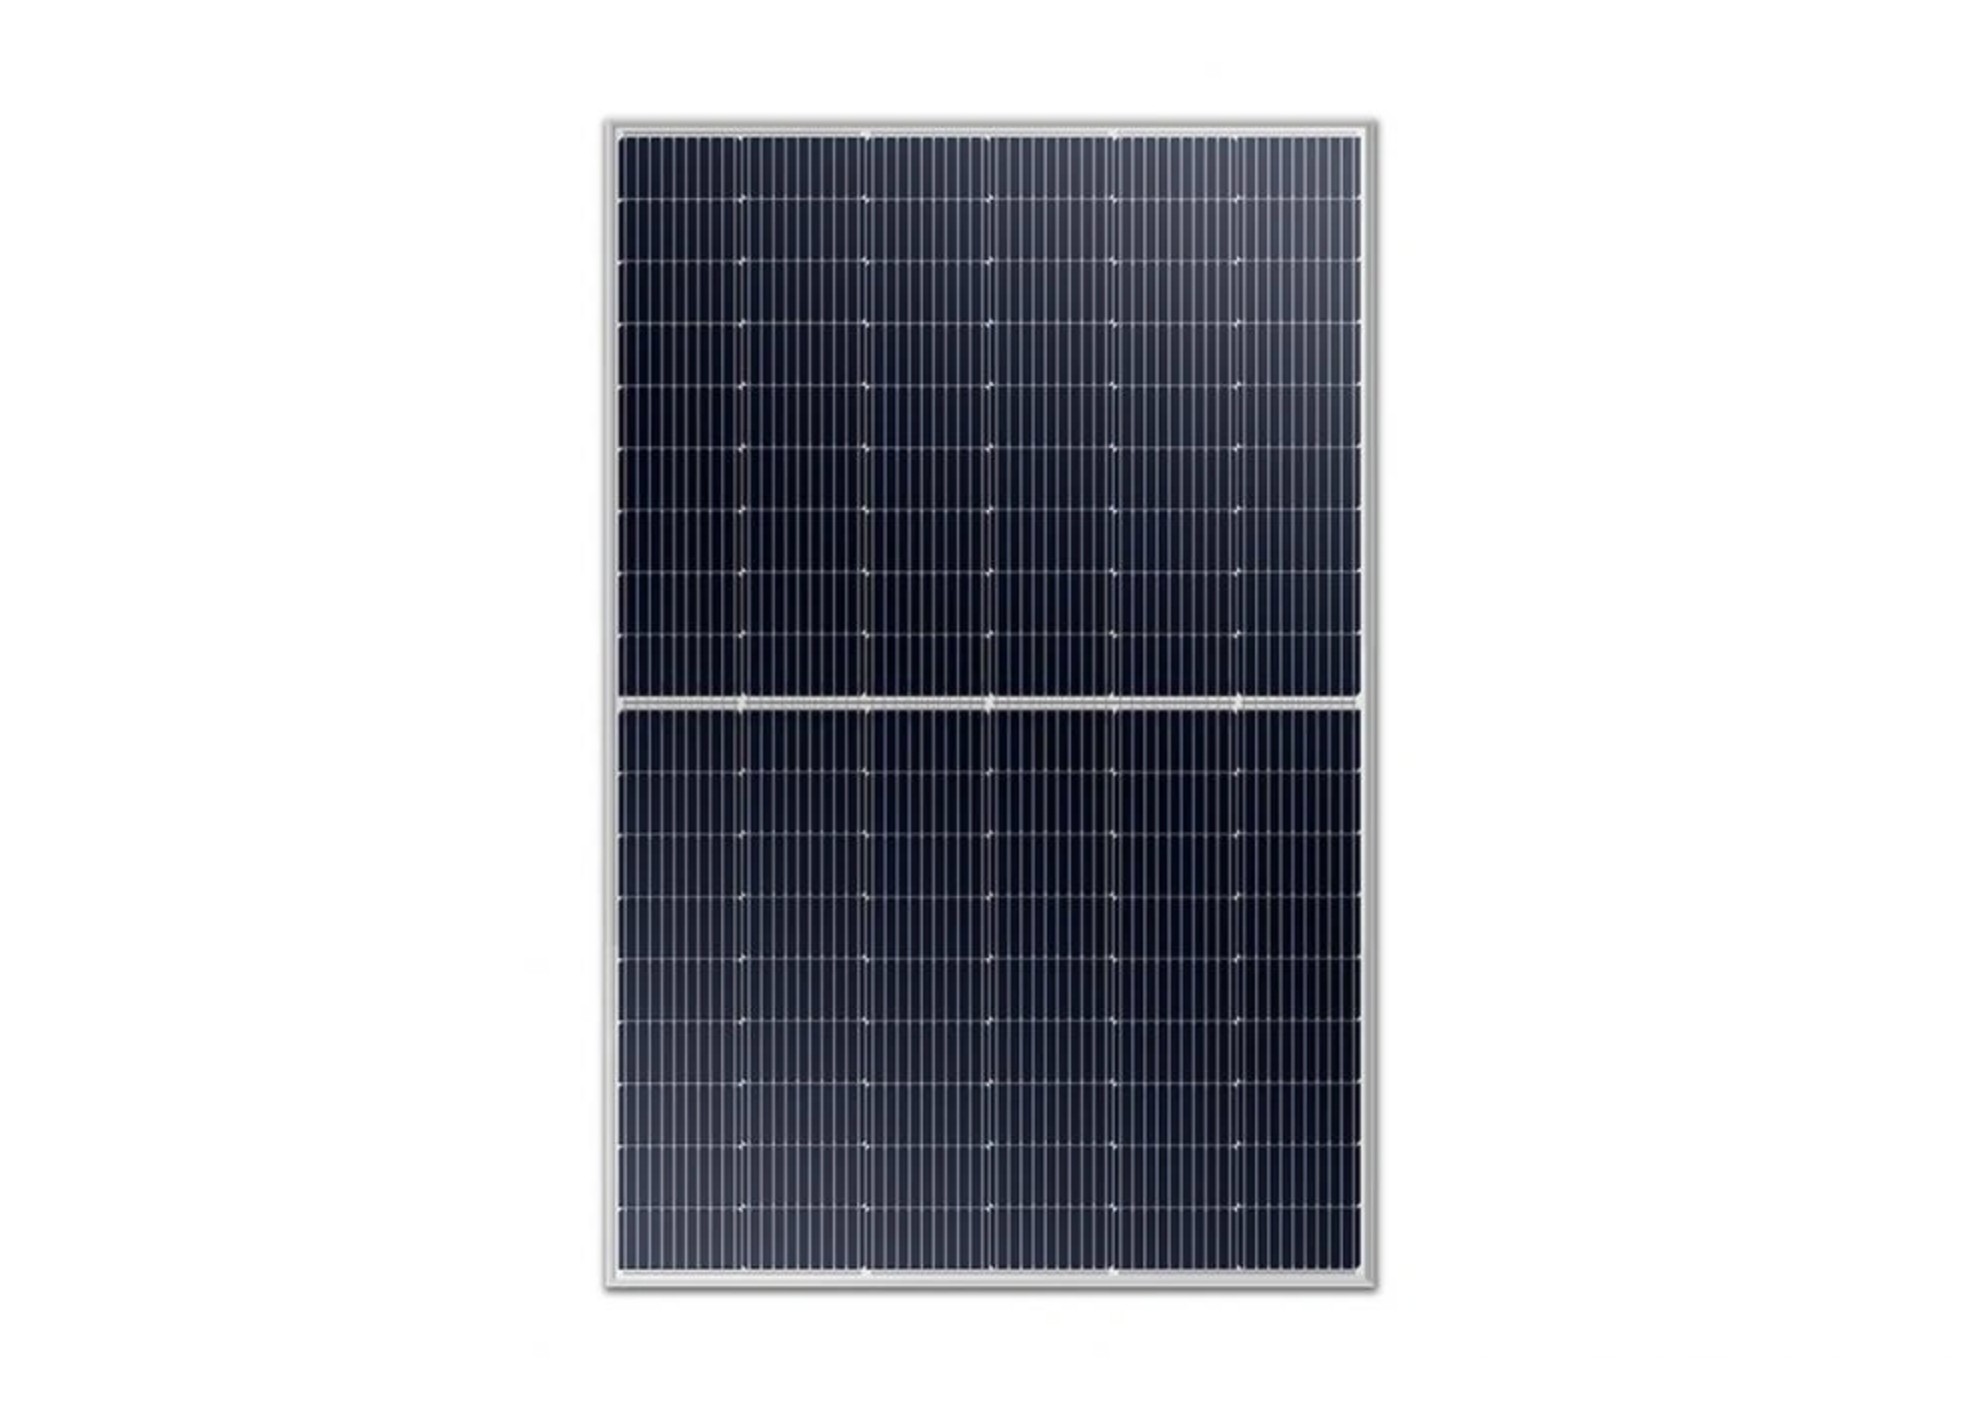 Solárny panel SUNKET 410W strieborný